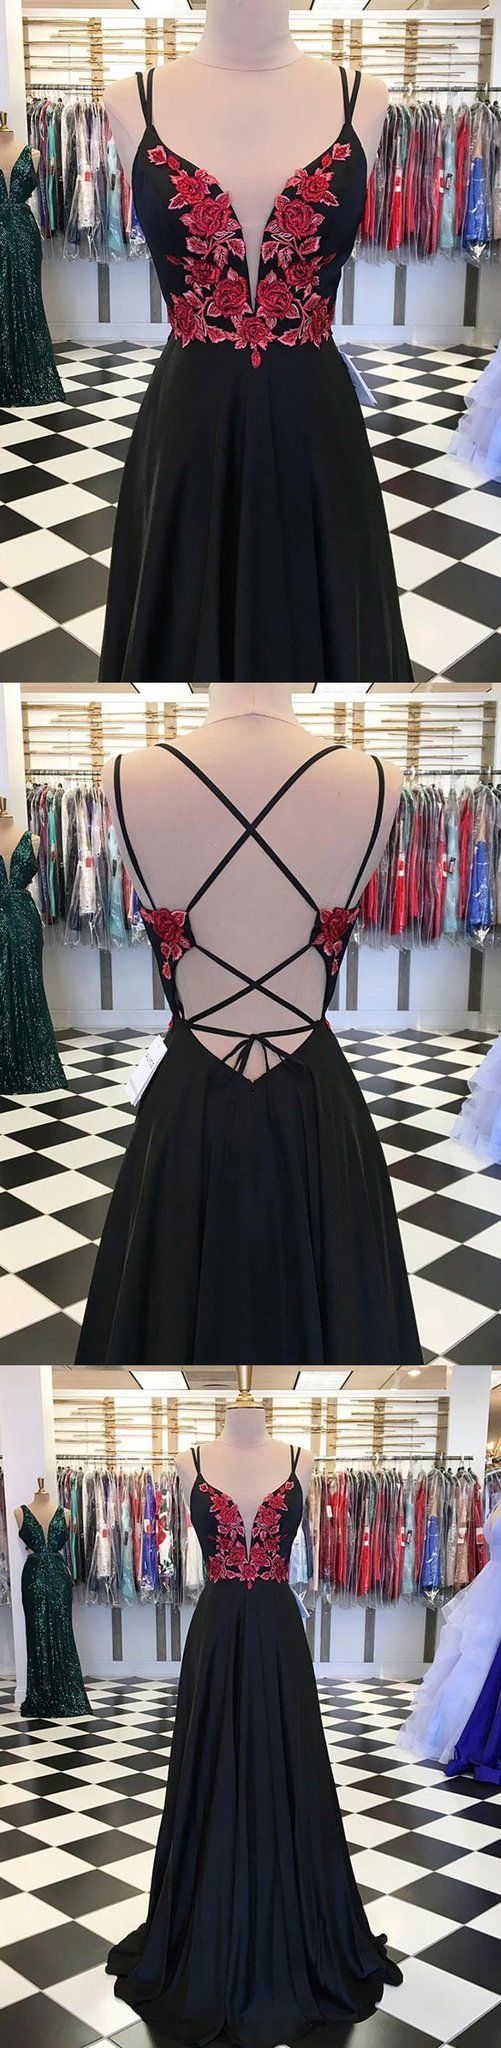 Black Lace Chiffon Long Prom Dress, Black Evening Dress M7065